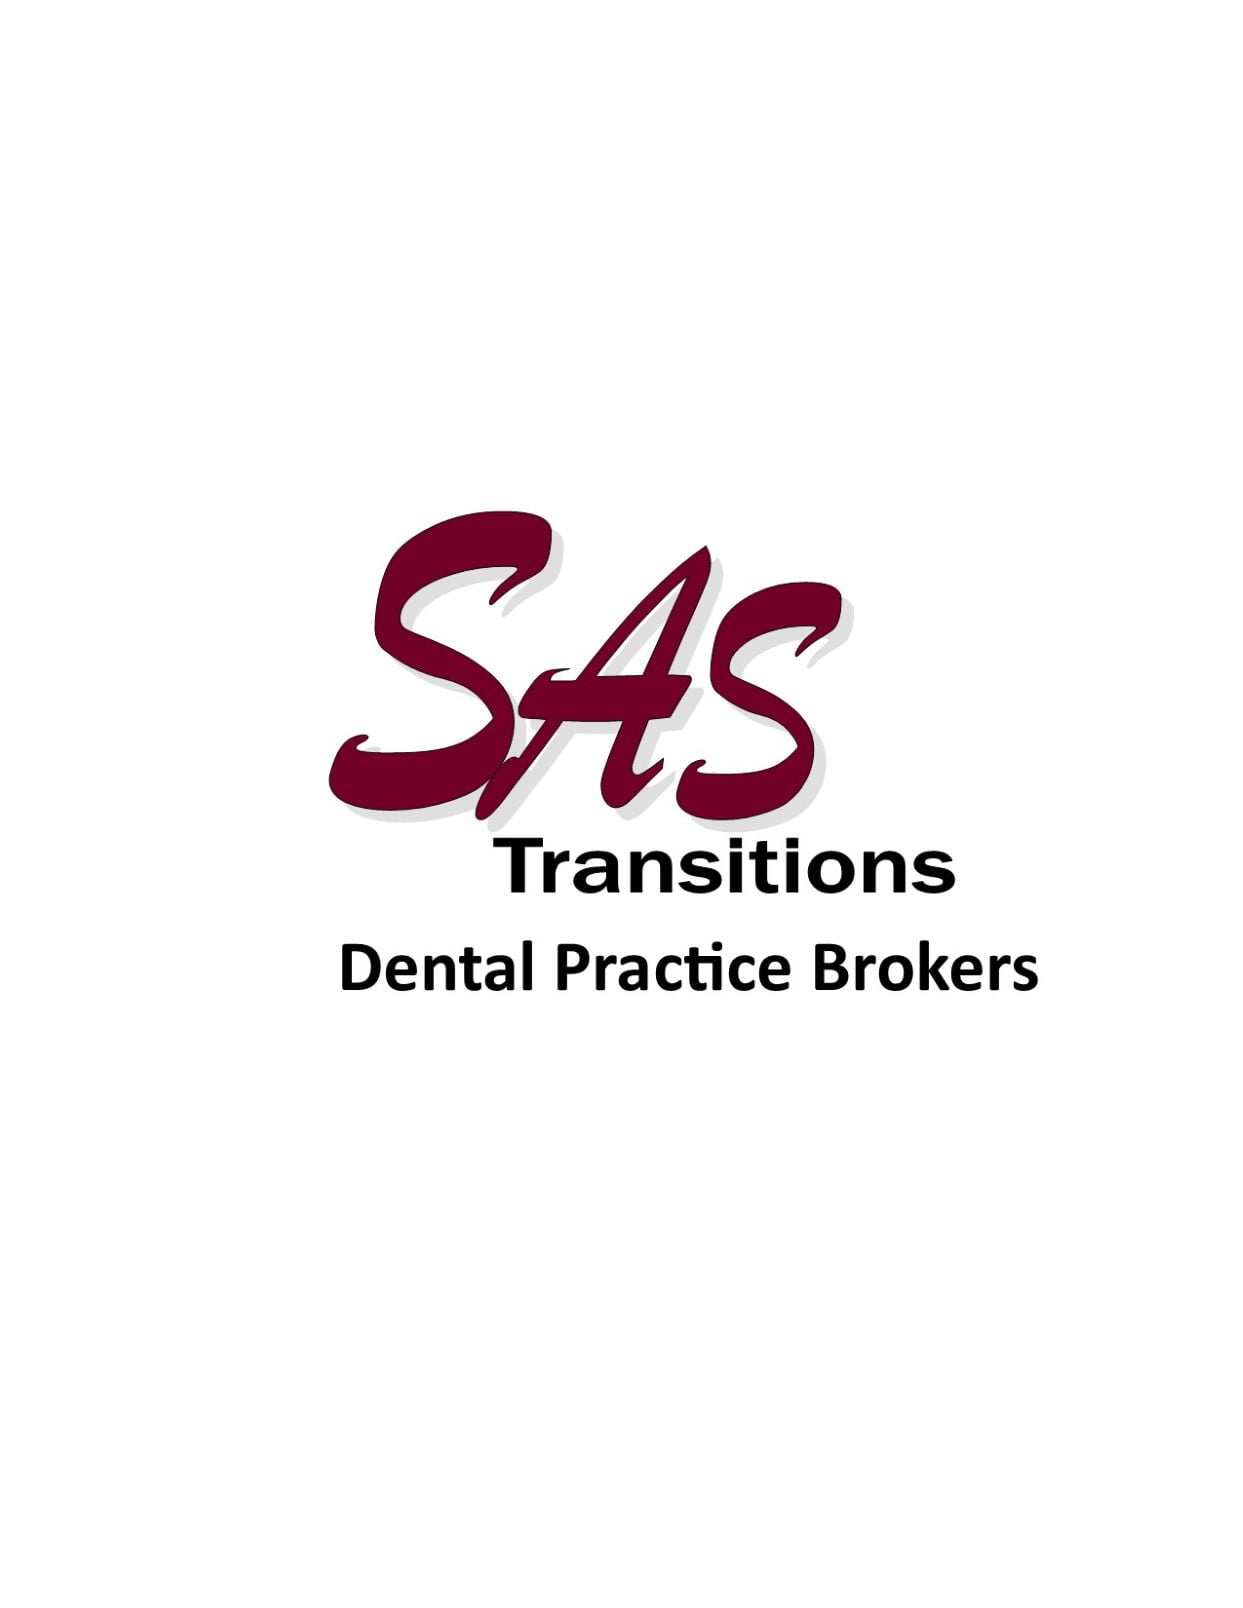 sas transitions logo